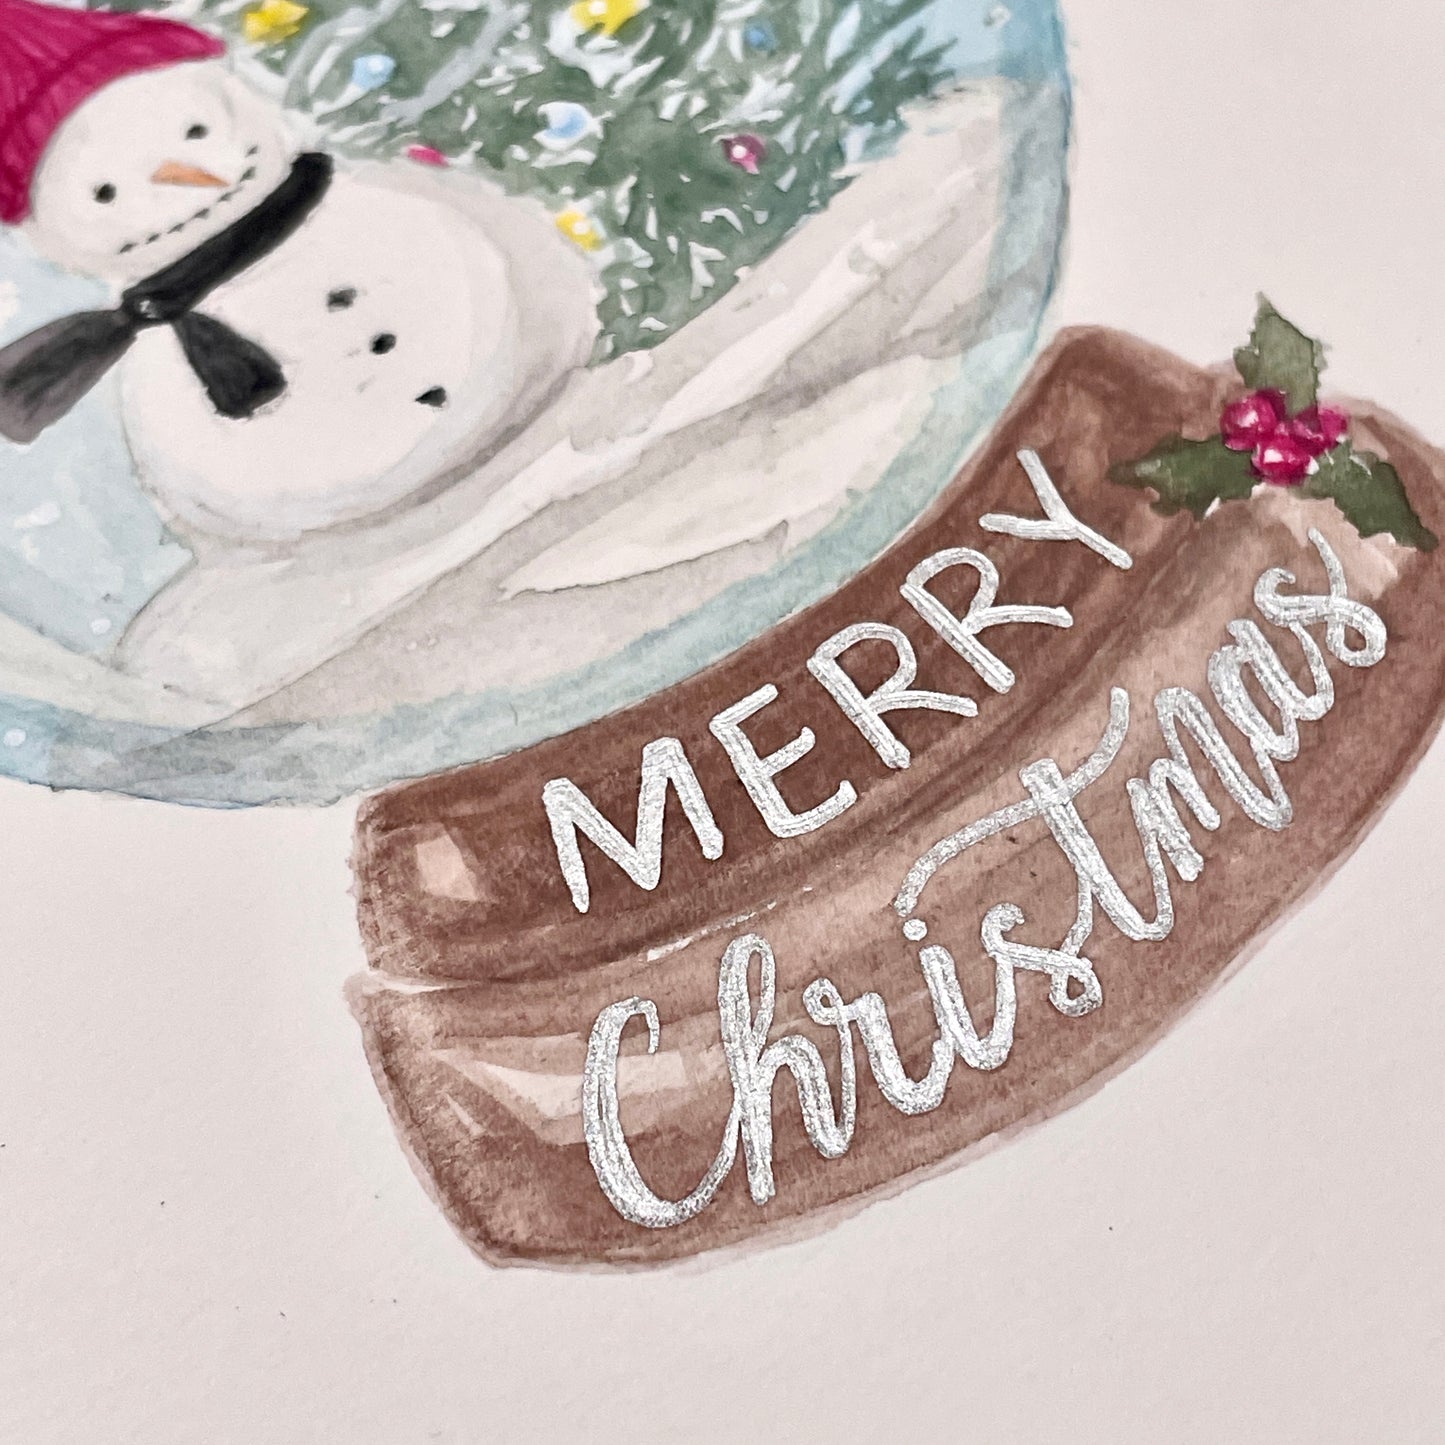 Watercolor Workshop - Christmas Snow Globe 水彩工作坊 - 聖誕水晶球